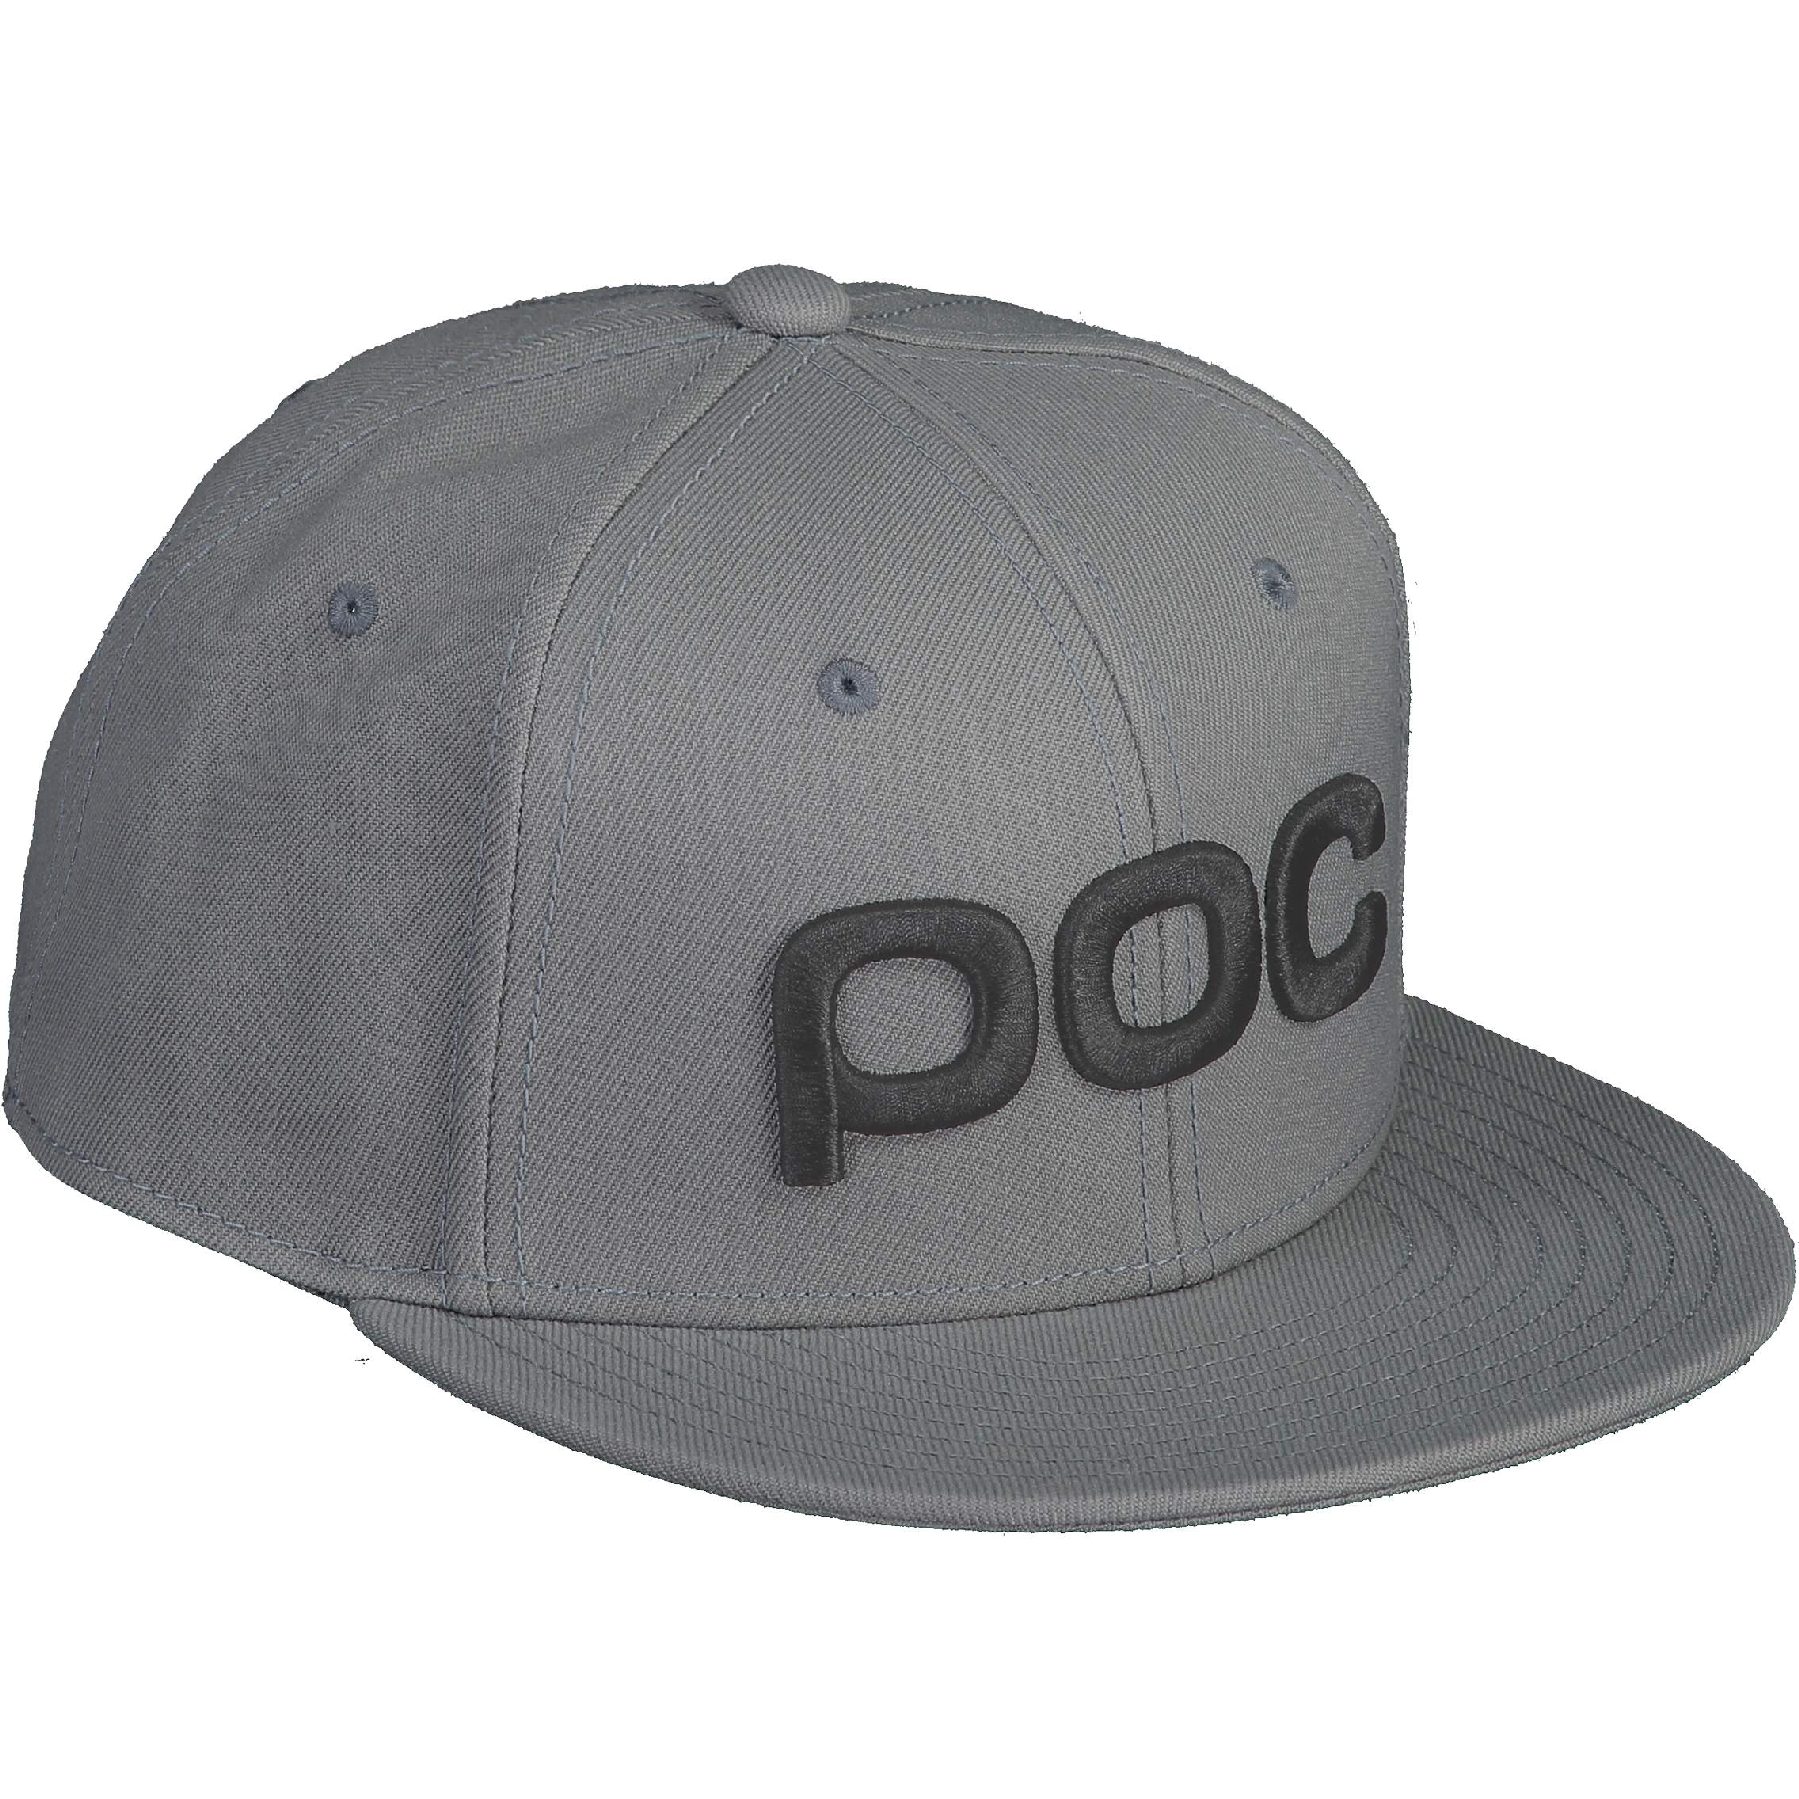 Produktbild von POC Corp Cap Kinder - 1041 Pegasi Grey